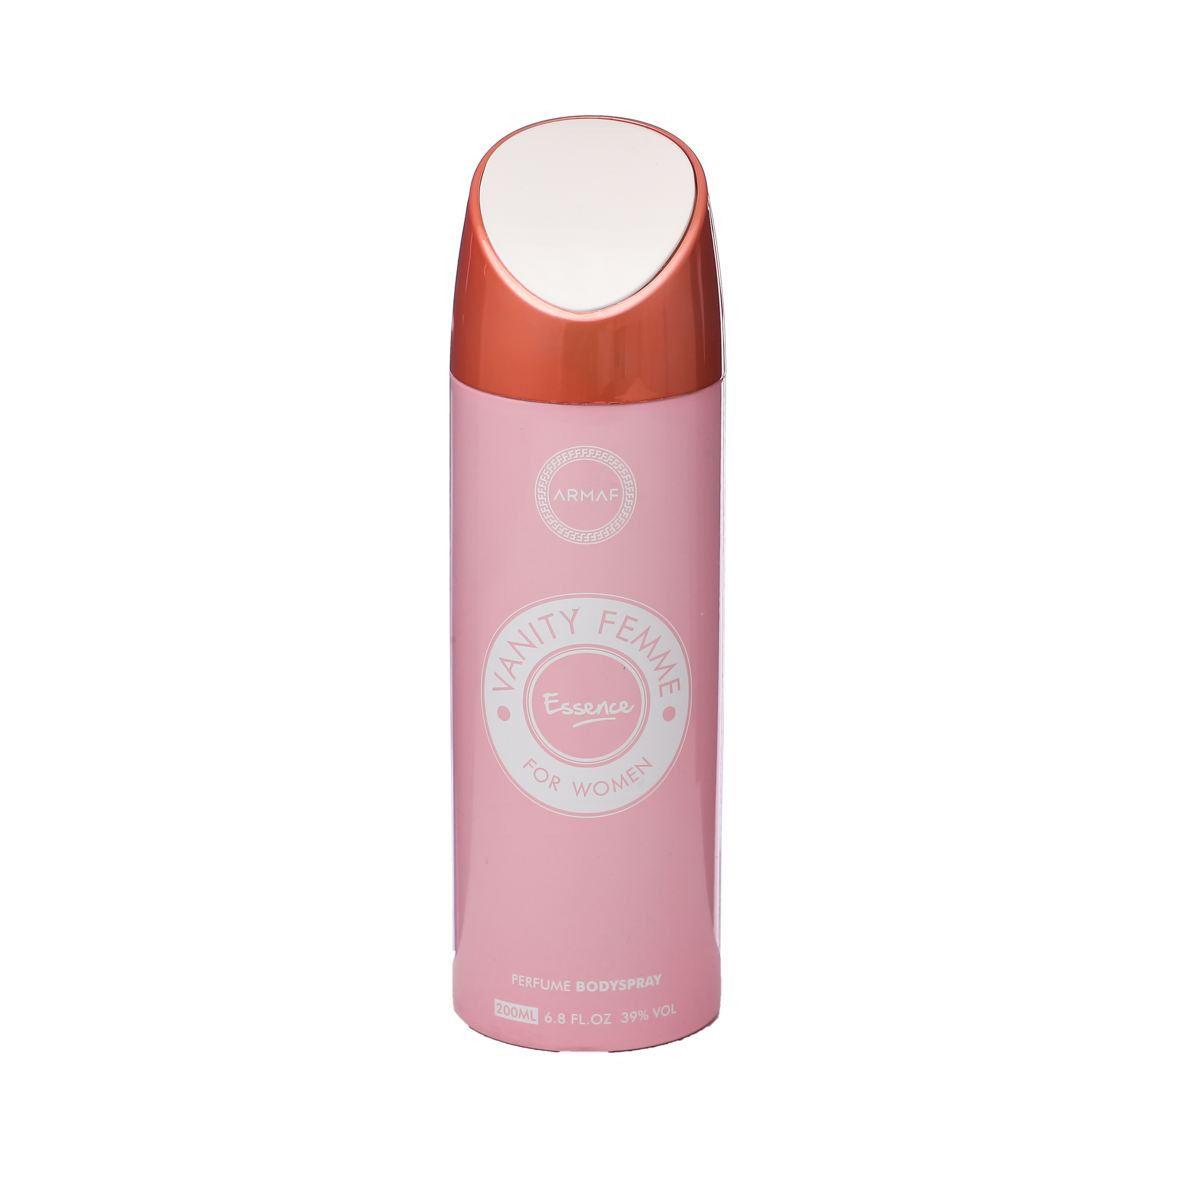 Armaf Vanity Femme Essence - deodorant ve spreji 200 ml